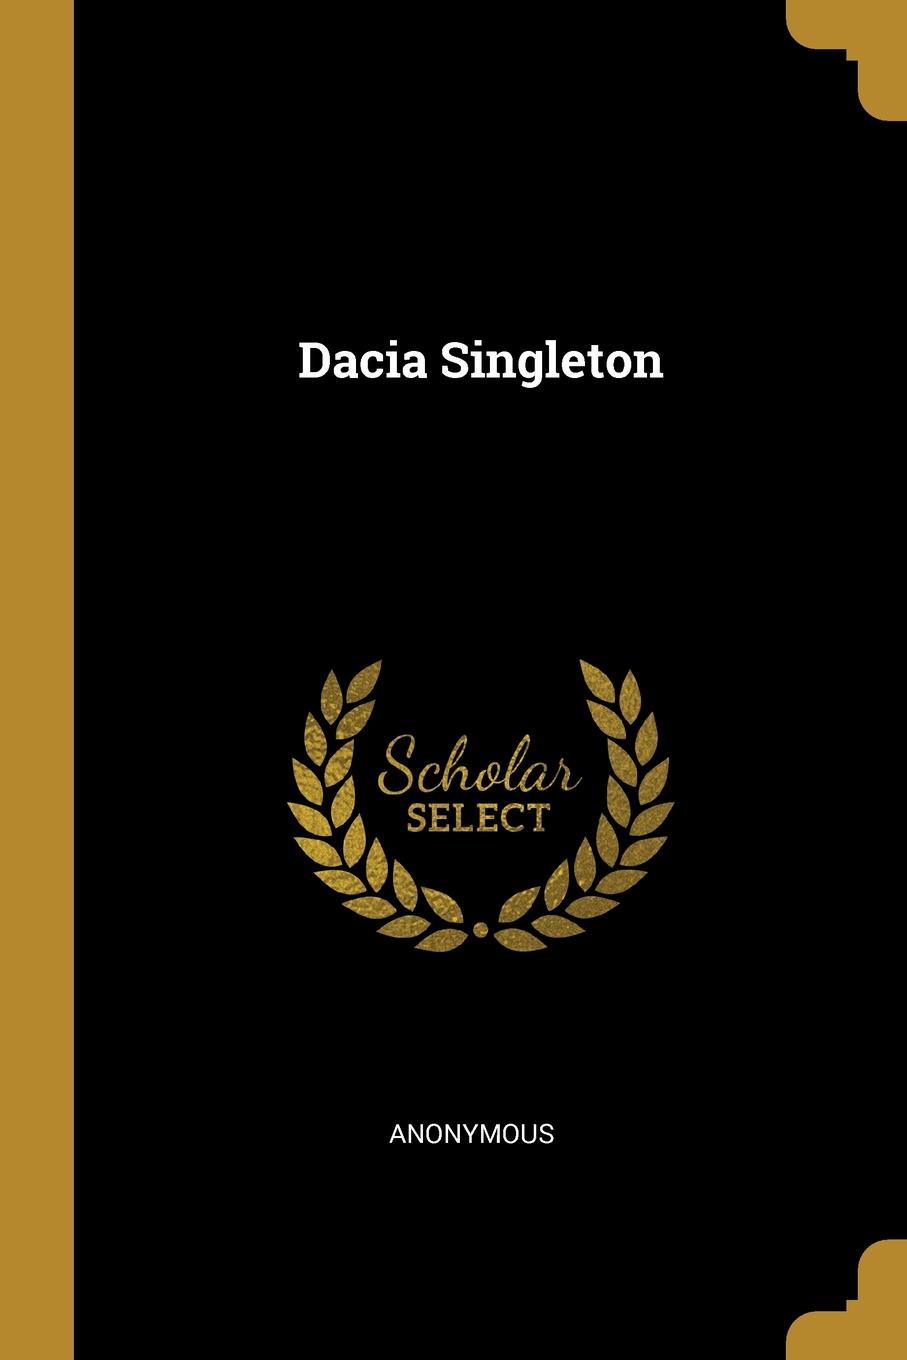 Dacia Singleton